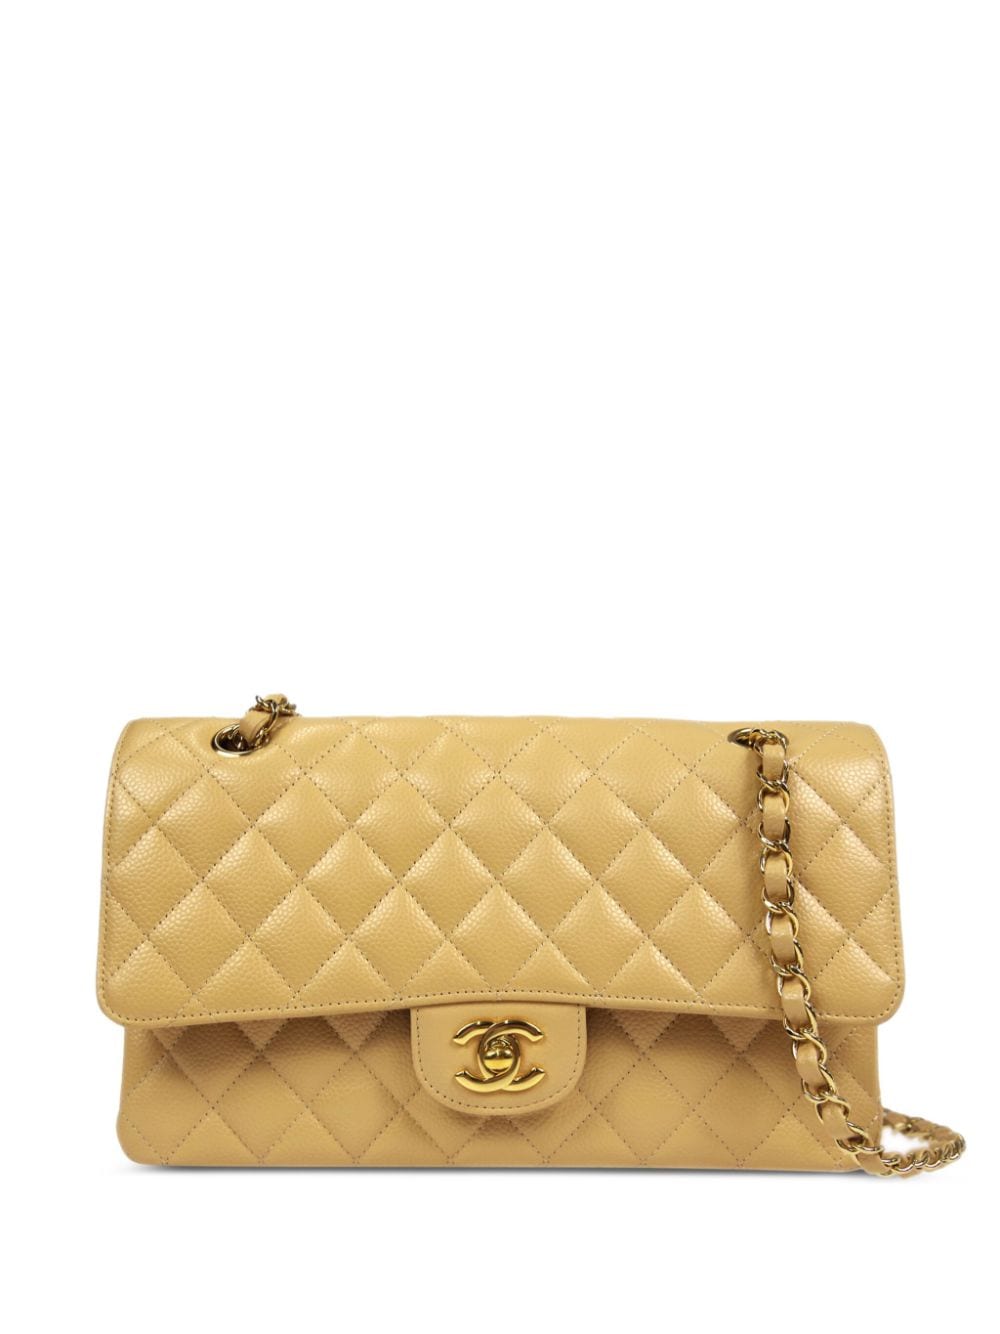 Chanel Nude Flap Bag – thankunext.us